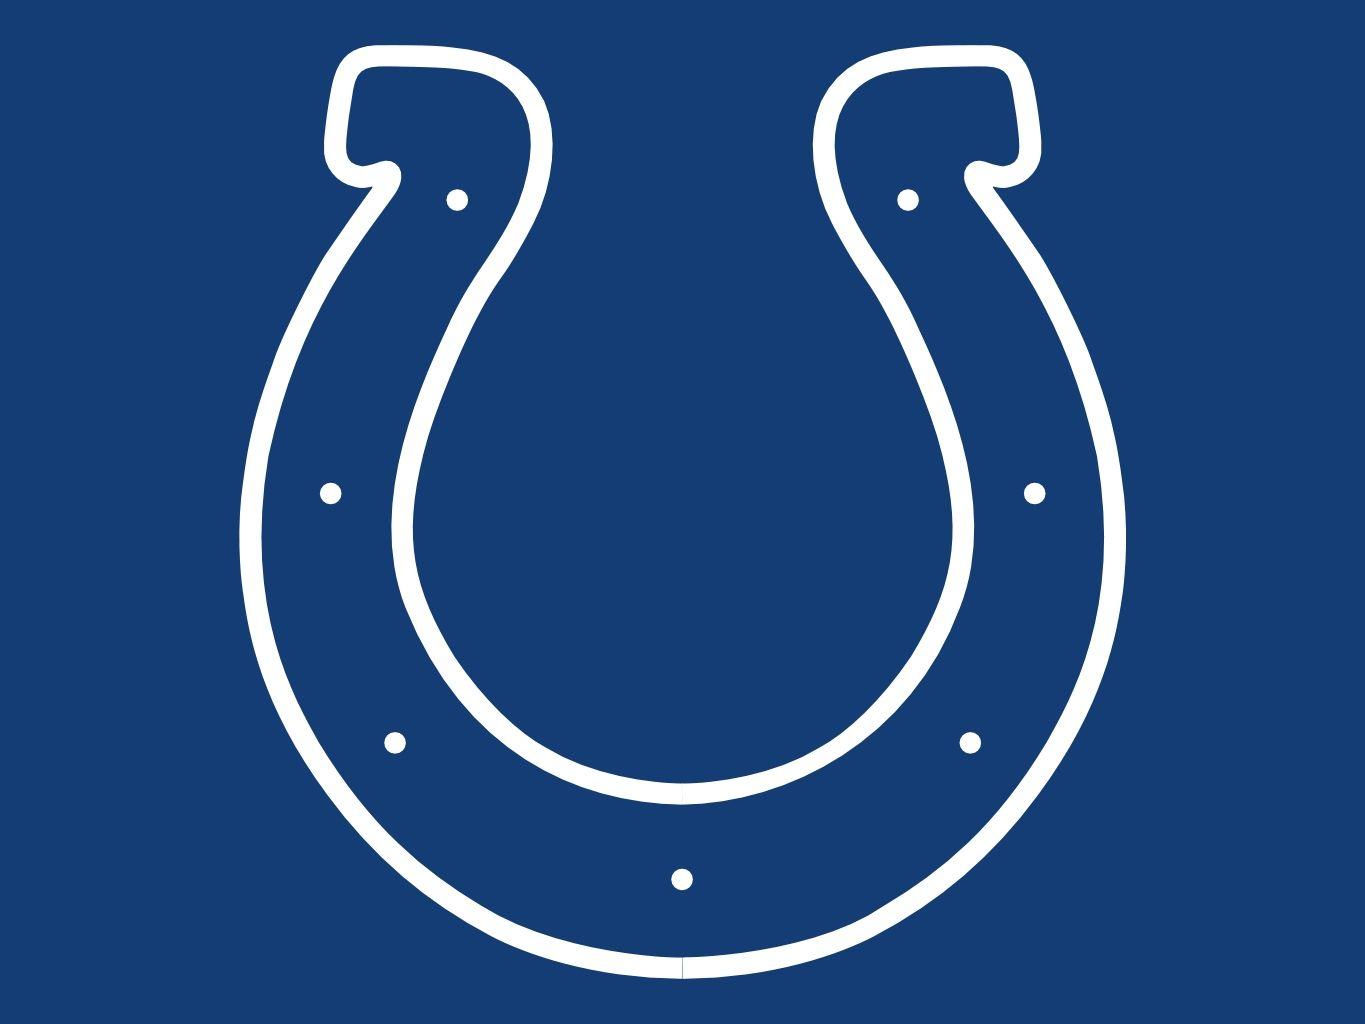 Colts Horseshoe Logo - Free Colts Logo, Download Free Clip Art, Free Clip Art on Clipart ...